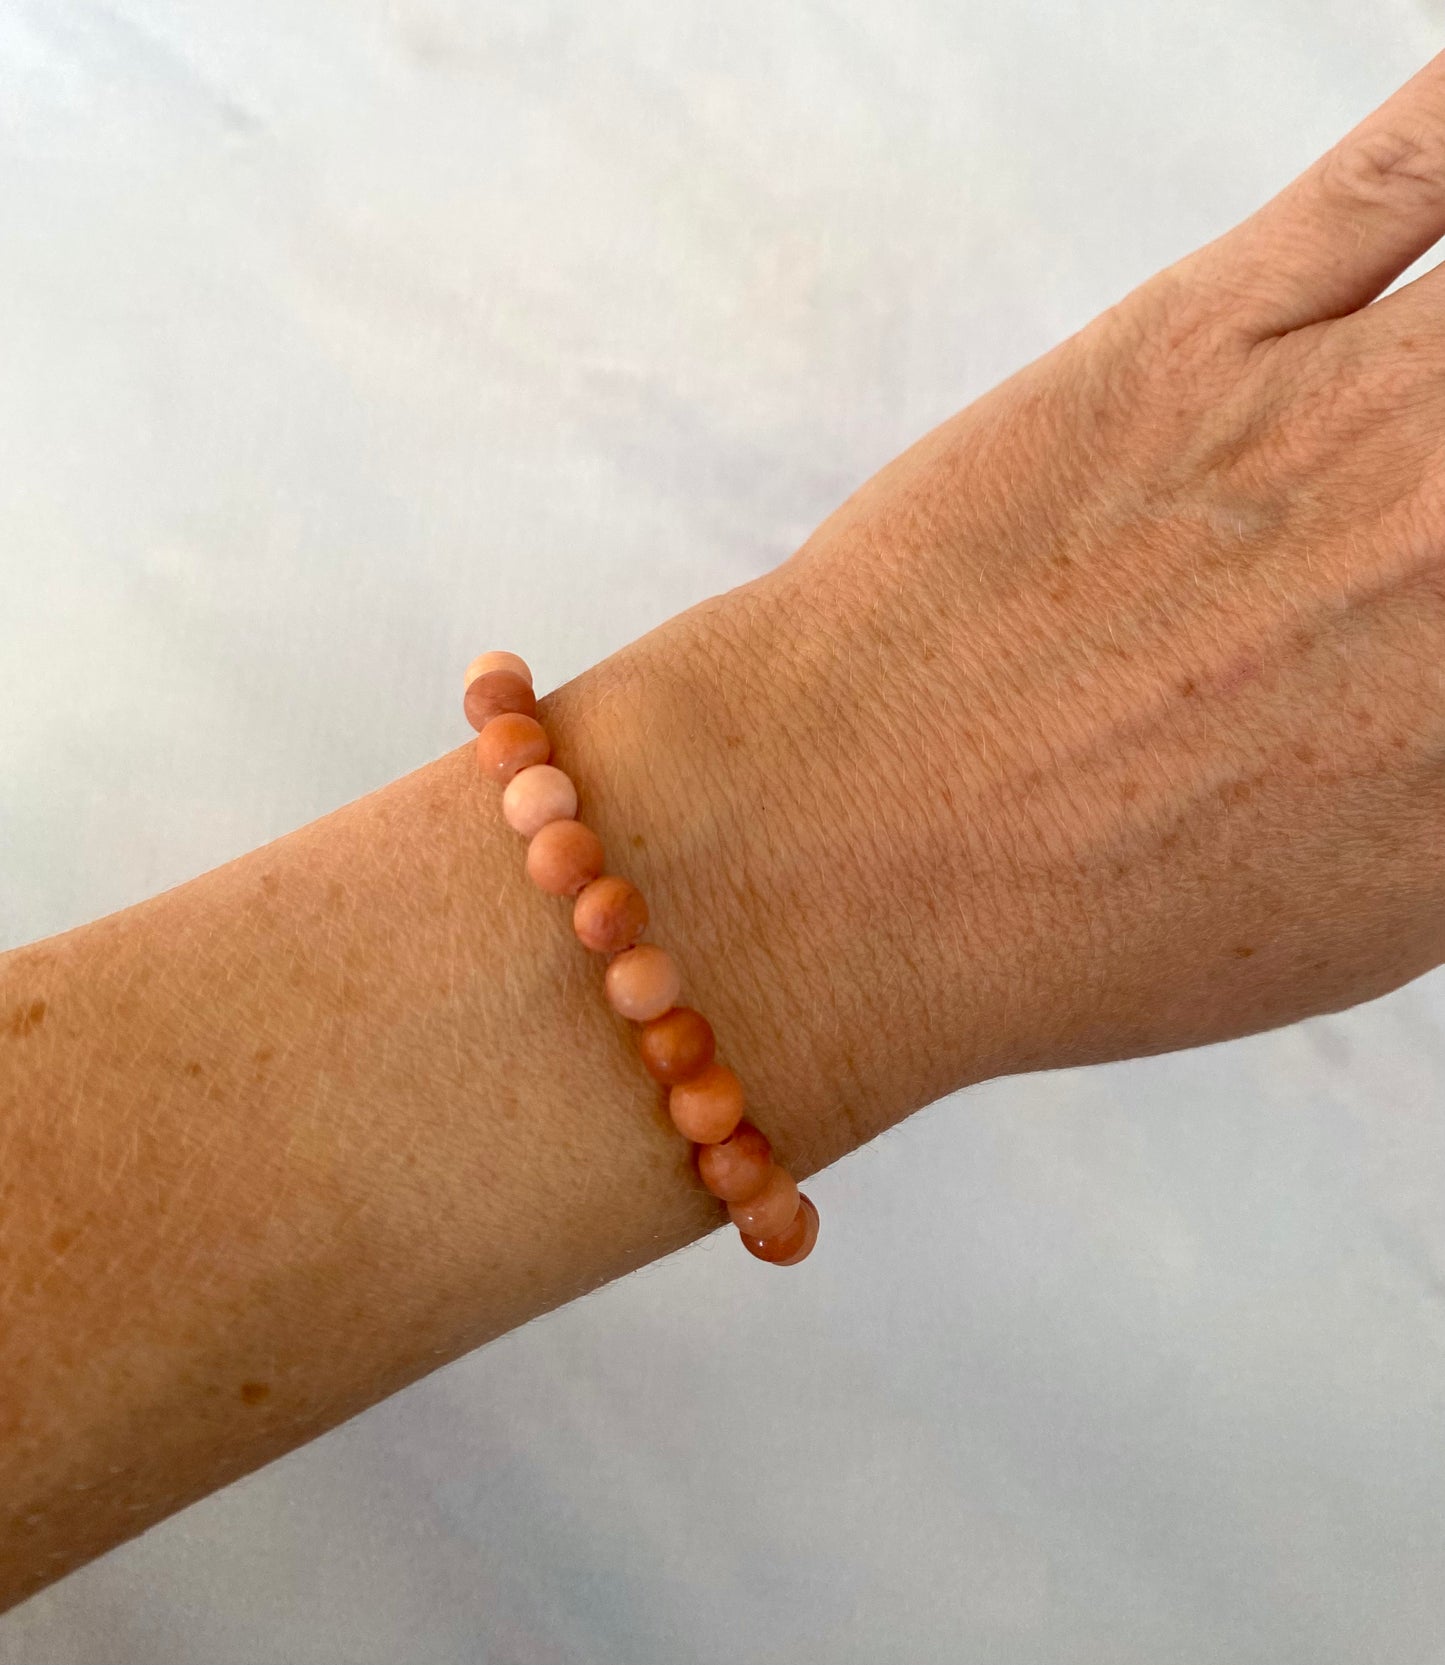 Arabic 'mother' bracelet